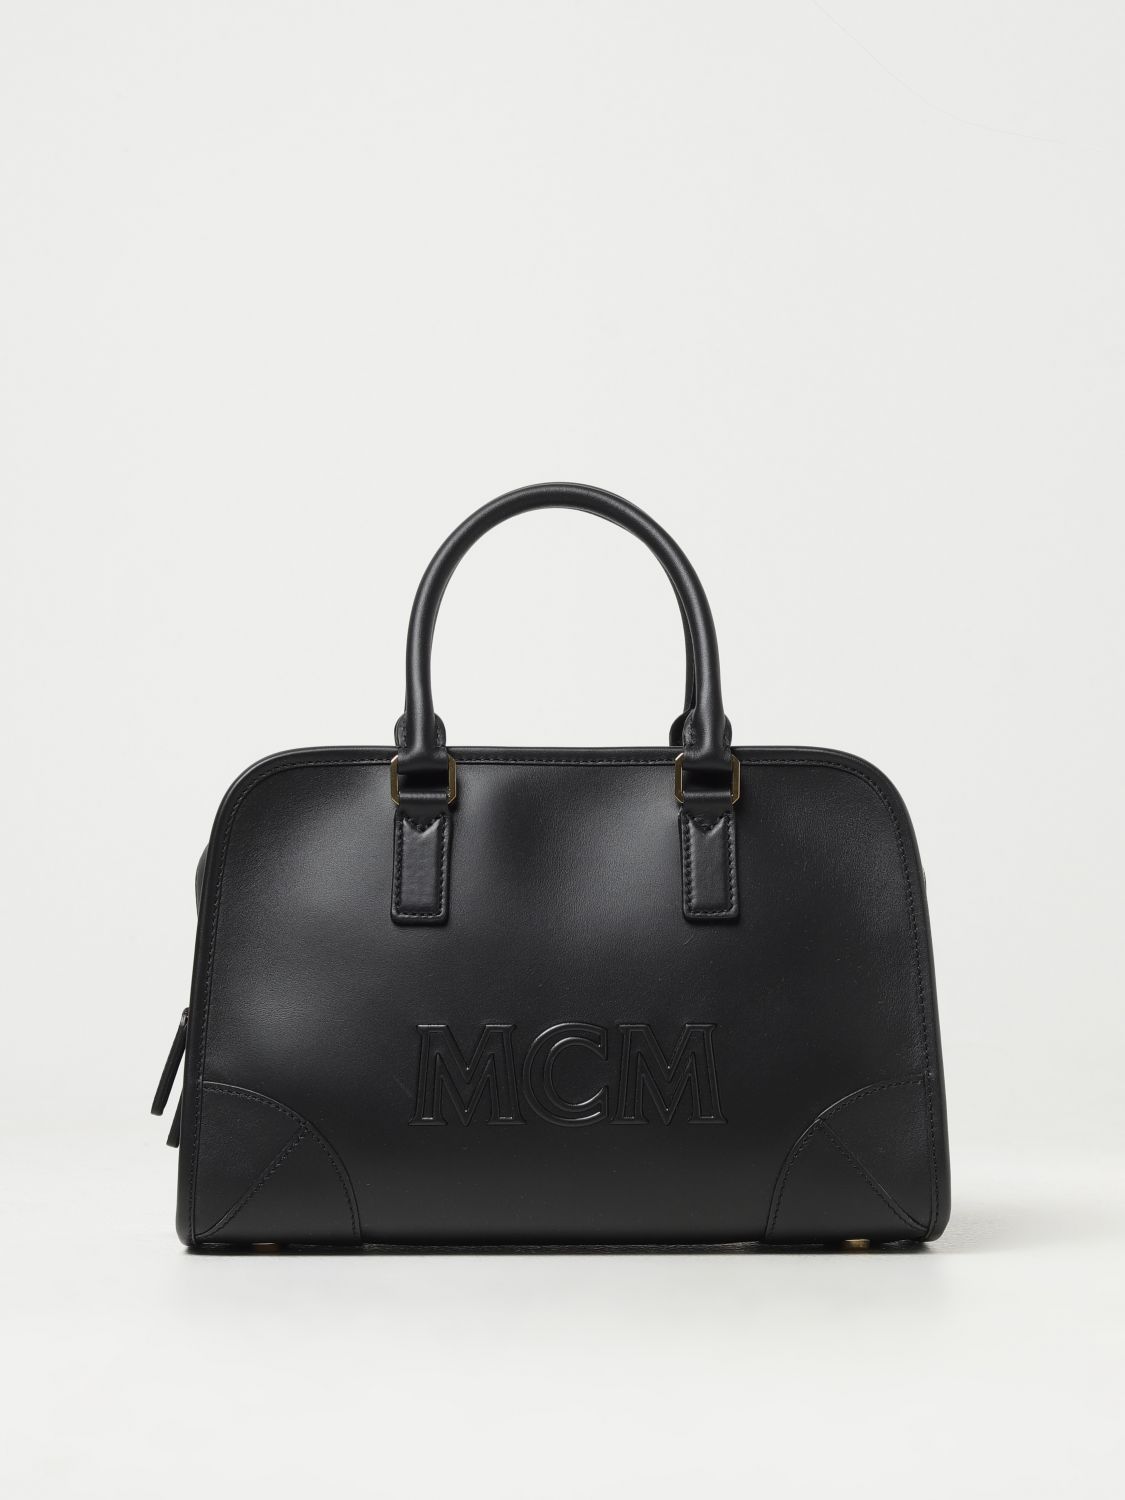 Mcm Handbag  Woman In Black